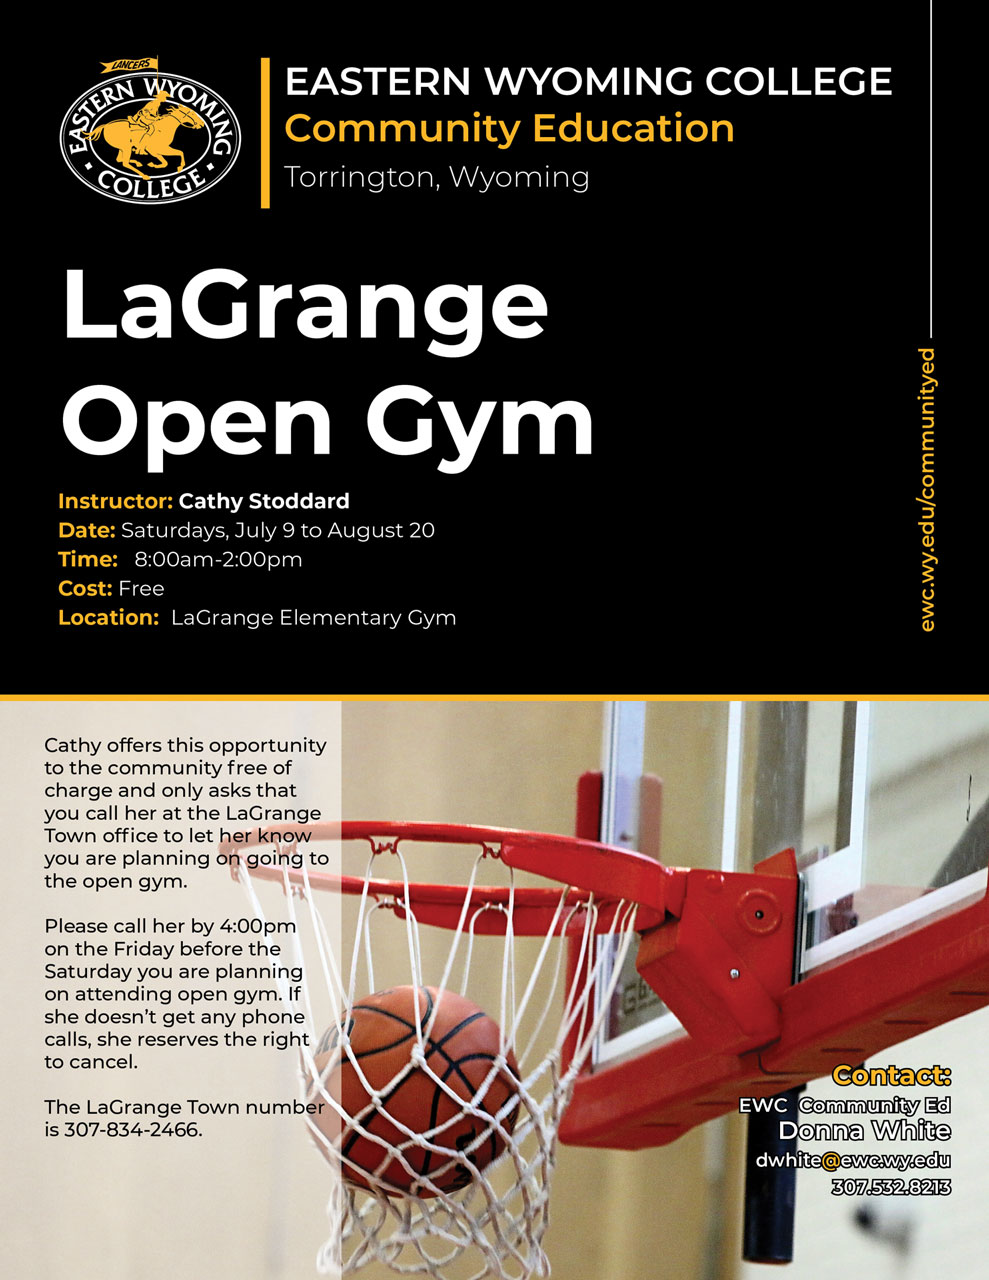 Eastern Wyoming College - Community Education - LaGrange Open Gym